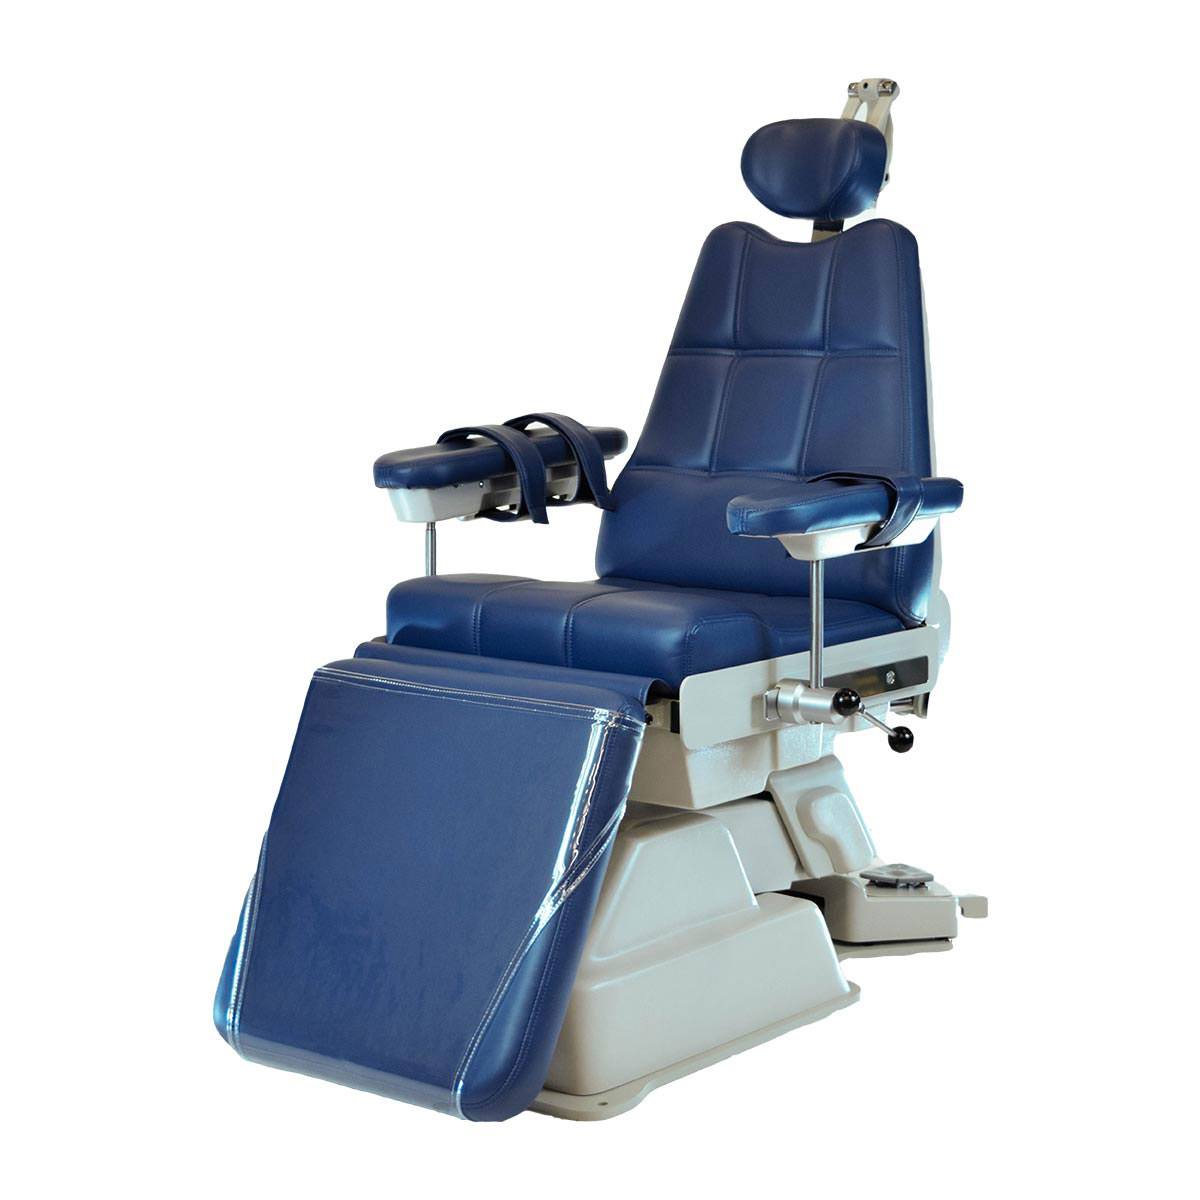 Boyd Industries, S2614 Dental Surgery Chair